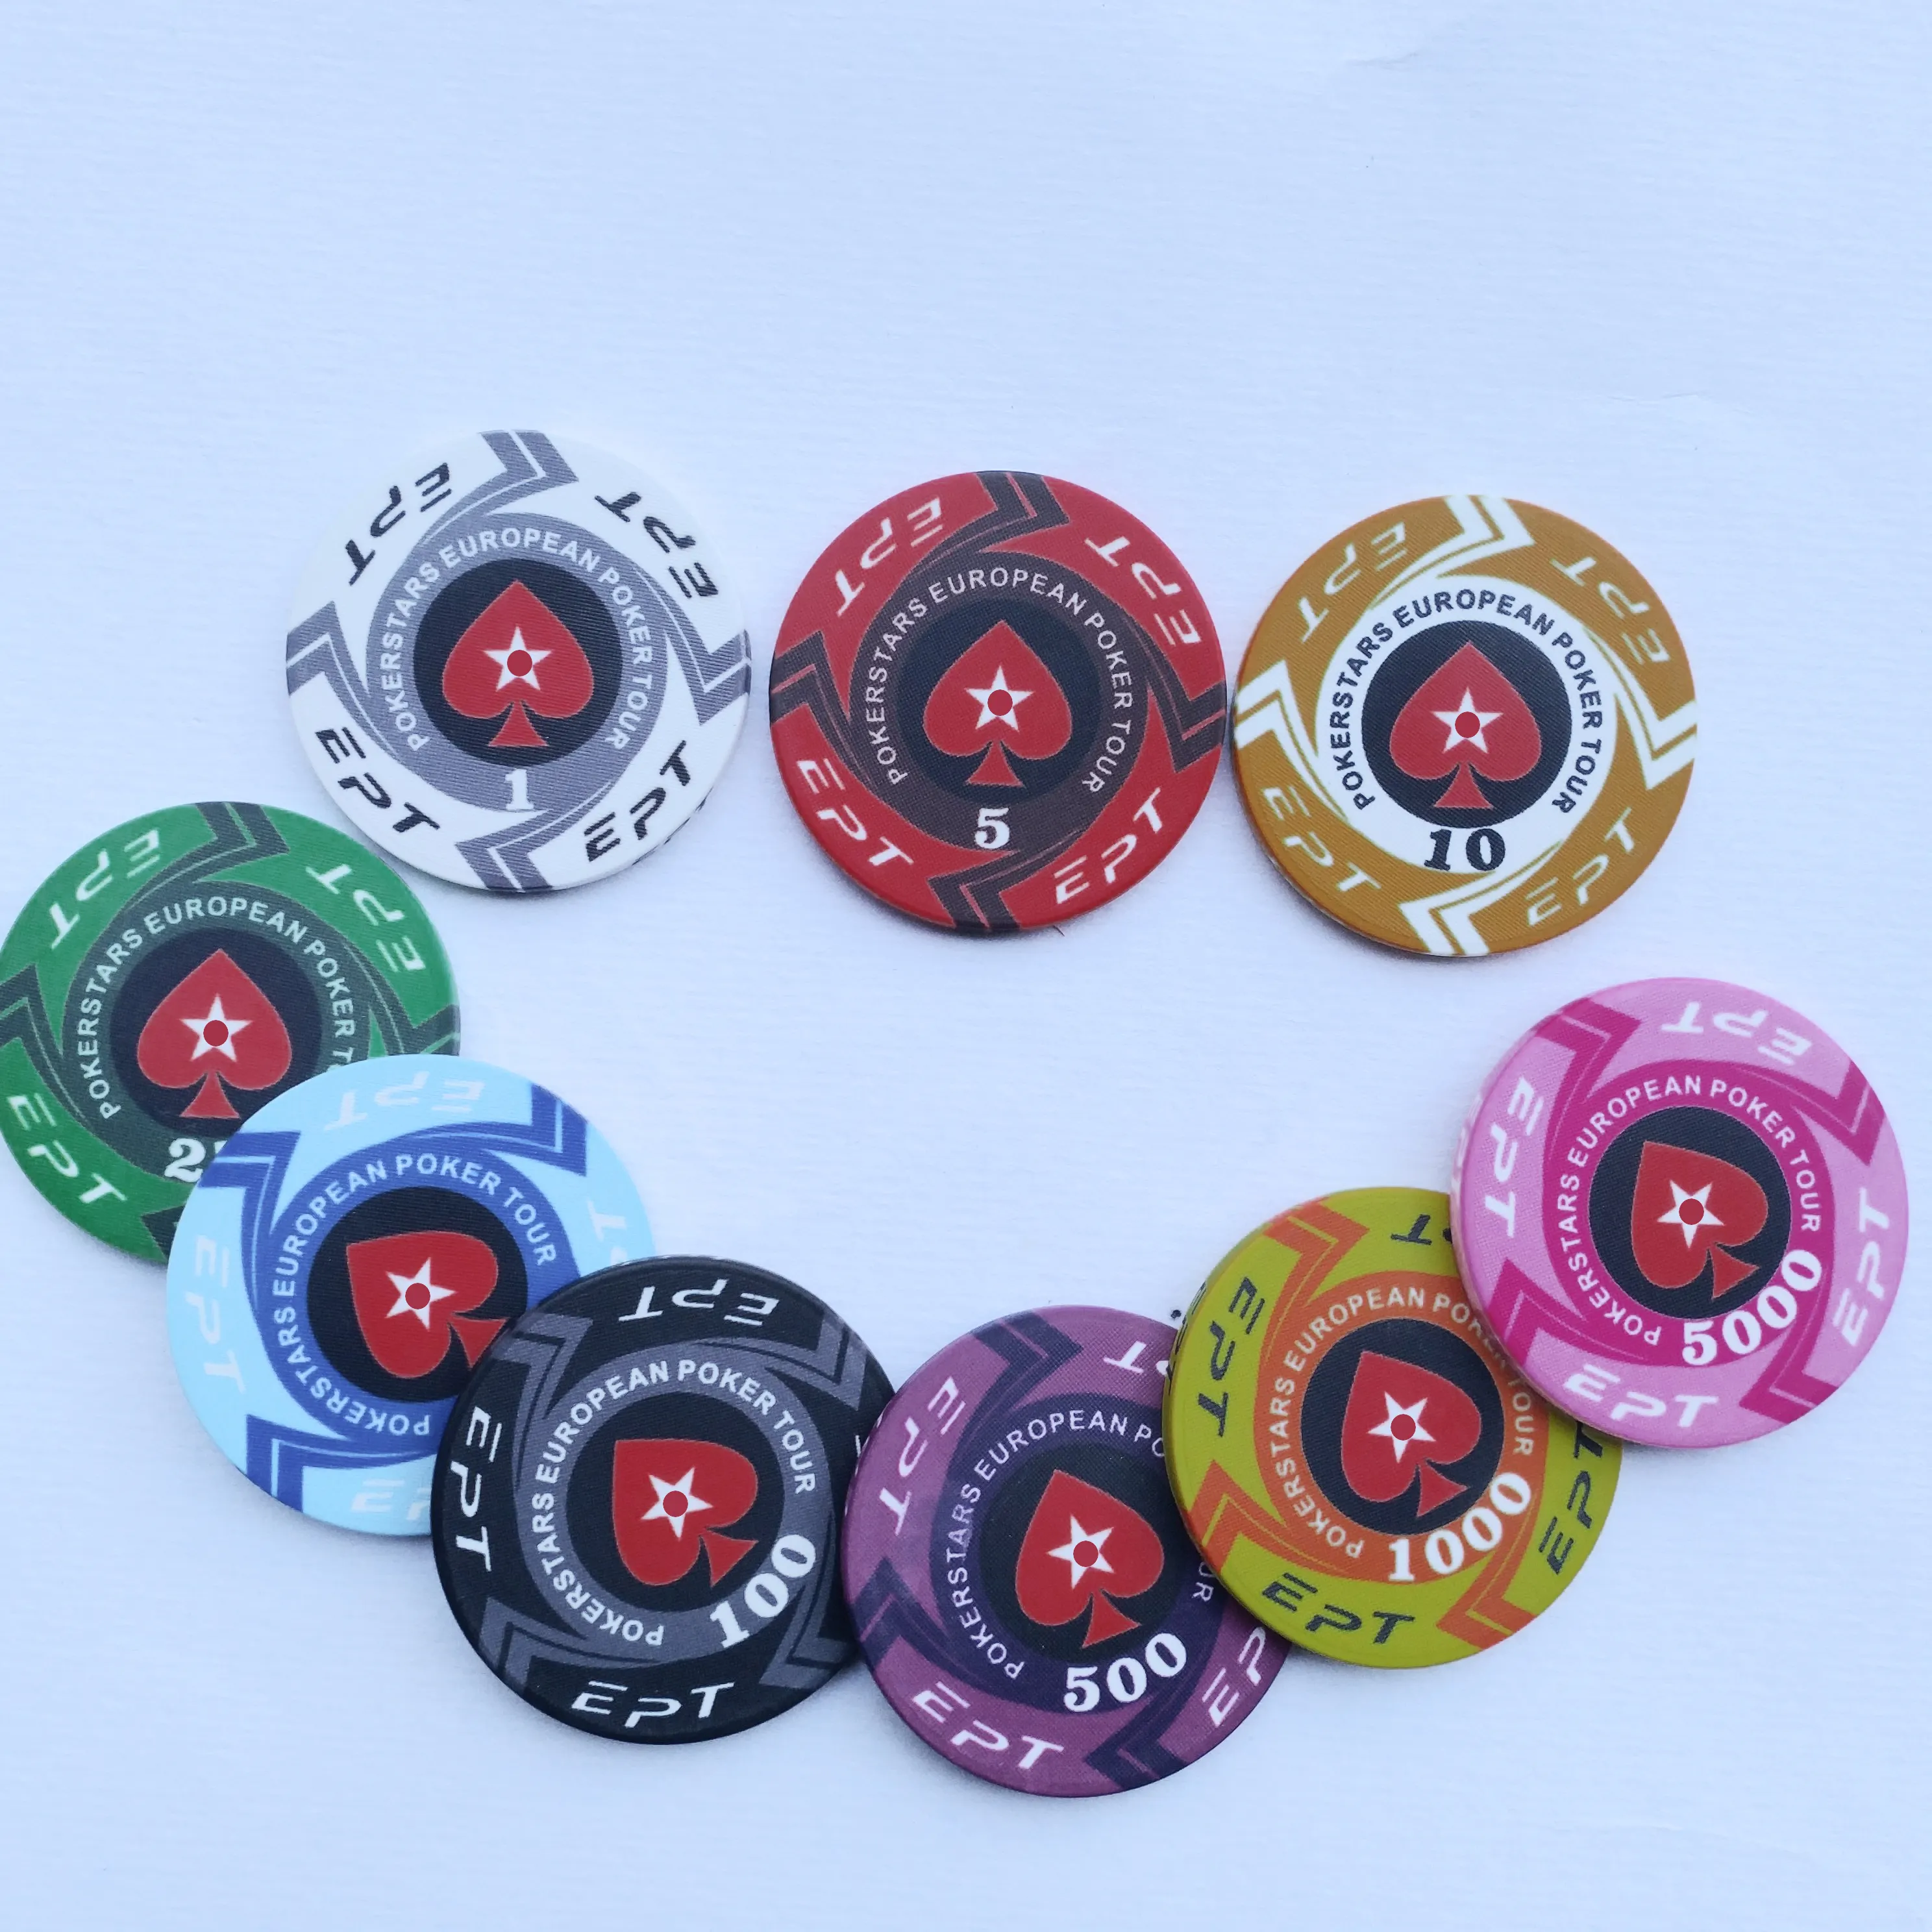 EPT Keramik Poker Chips Casino Qualität Benutzerdefinierte Leere Keramik Chips